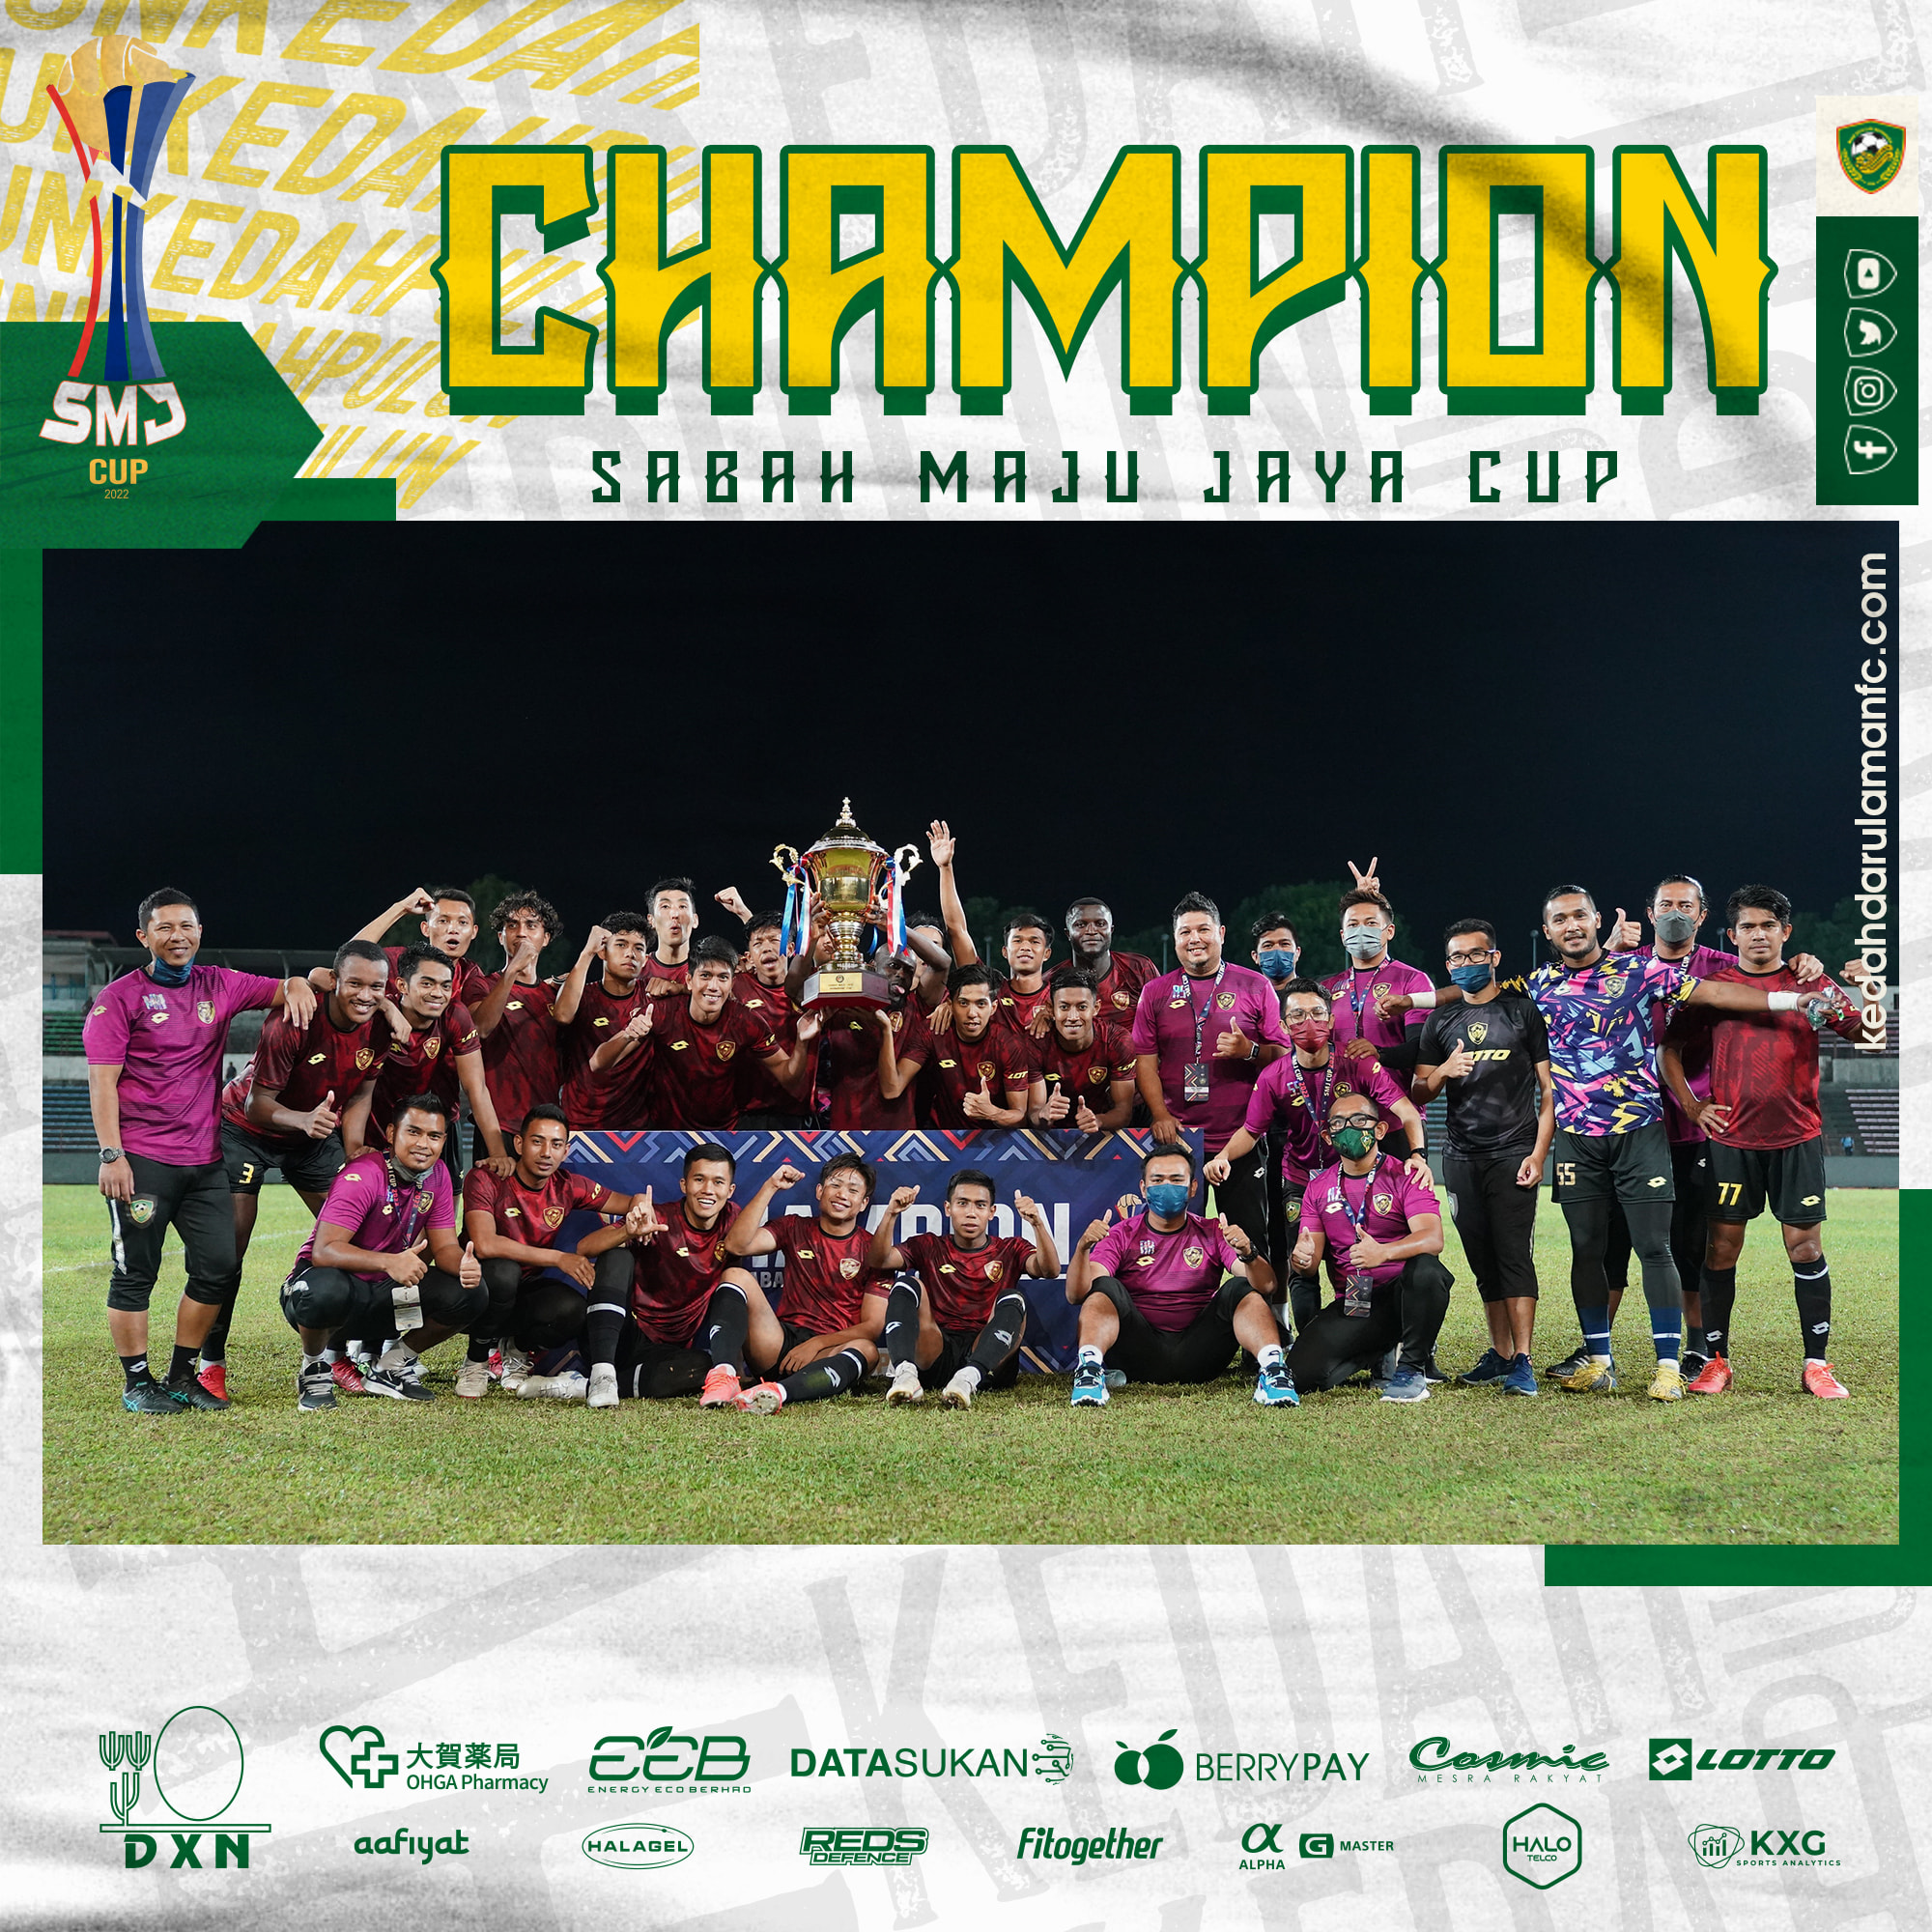 Kedah Juara Piala Sabah Maju Jaya